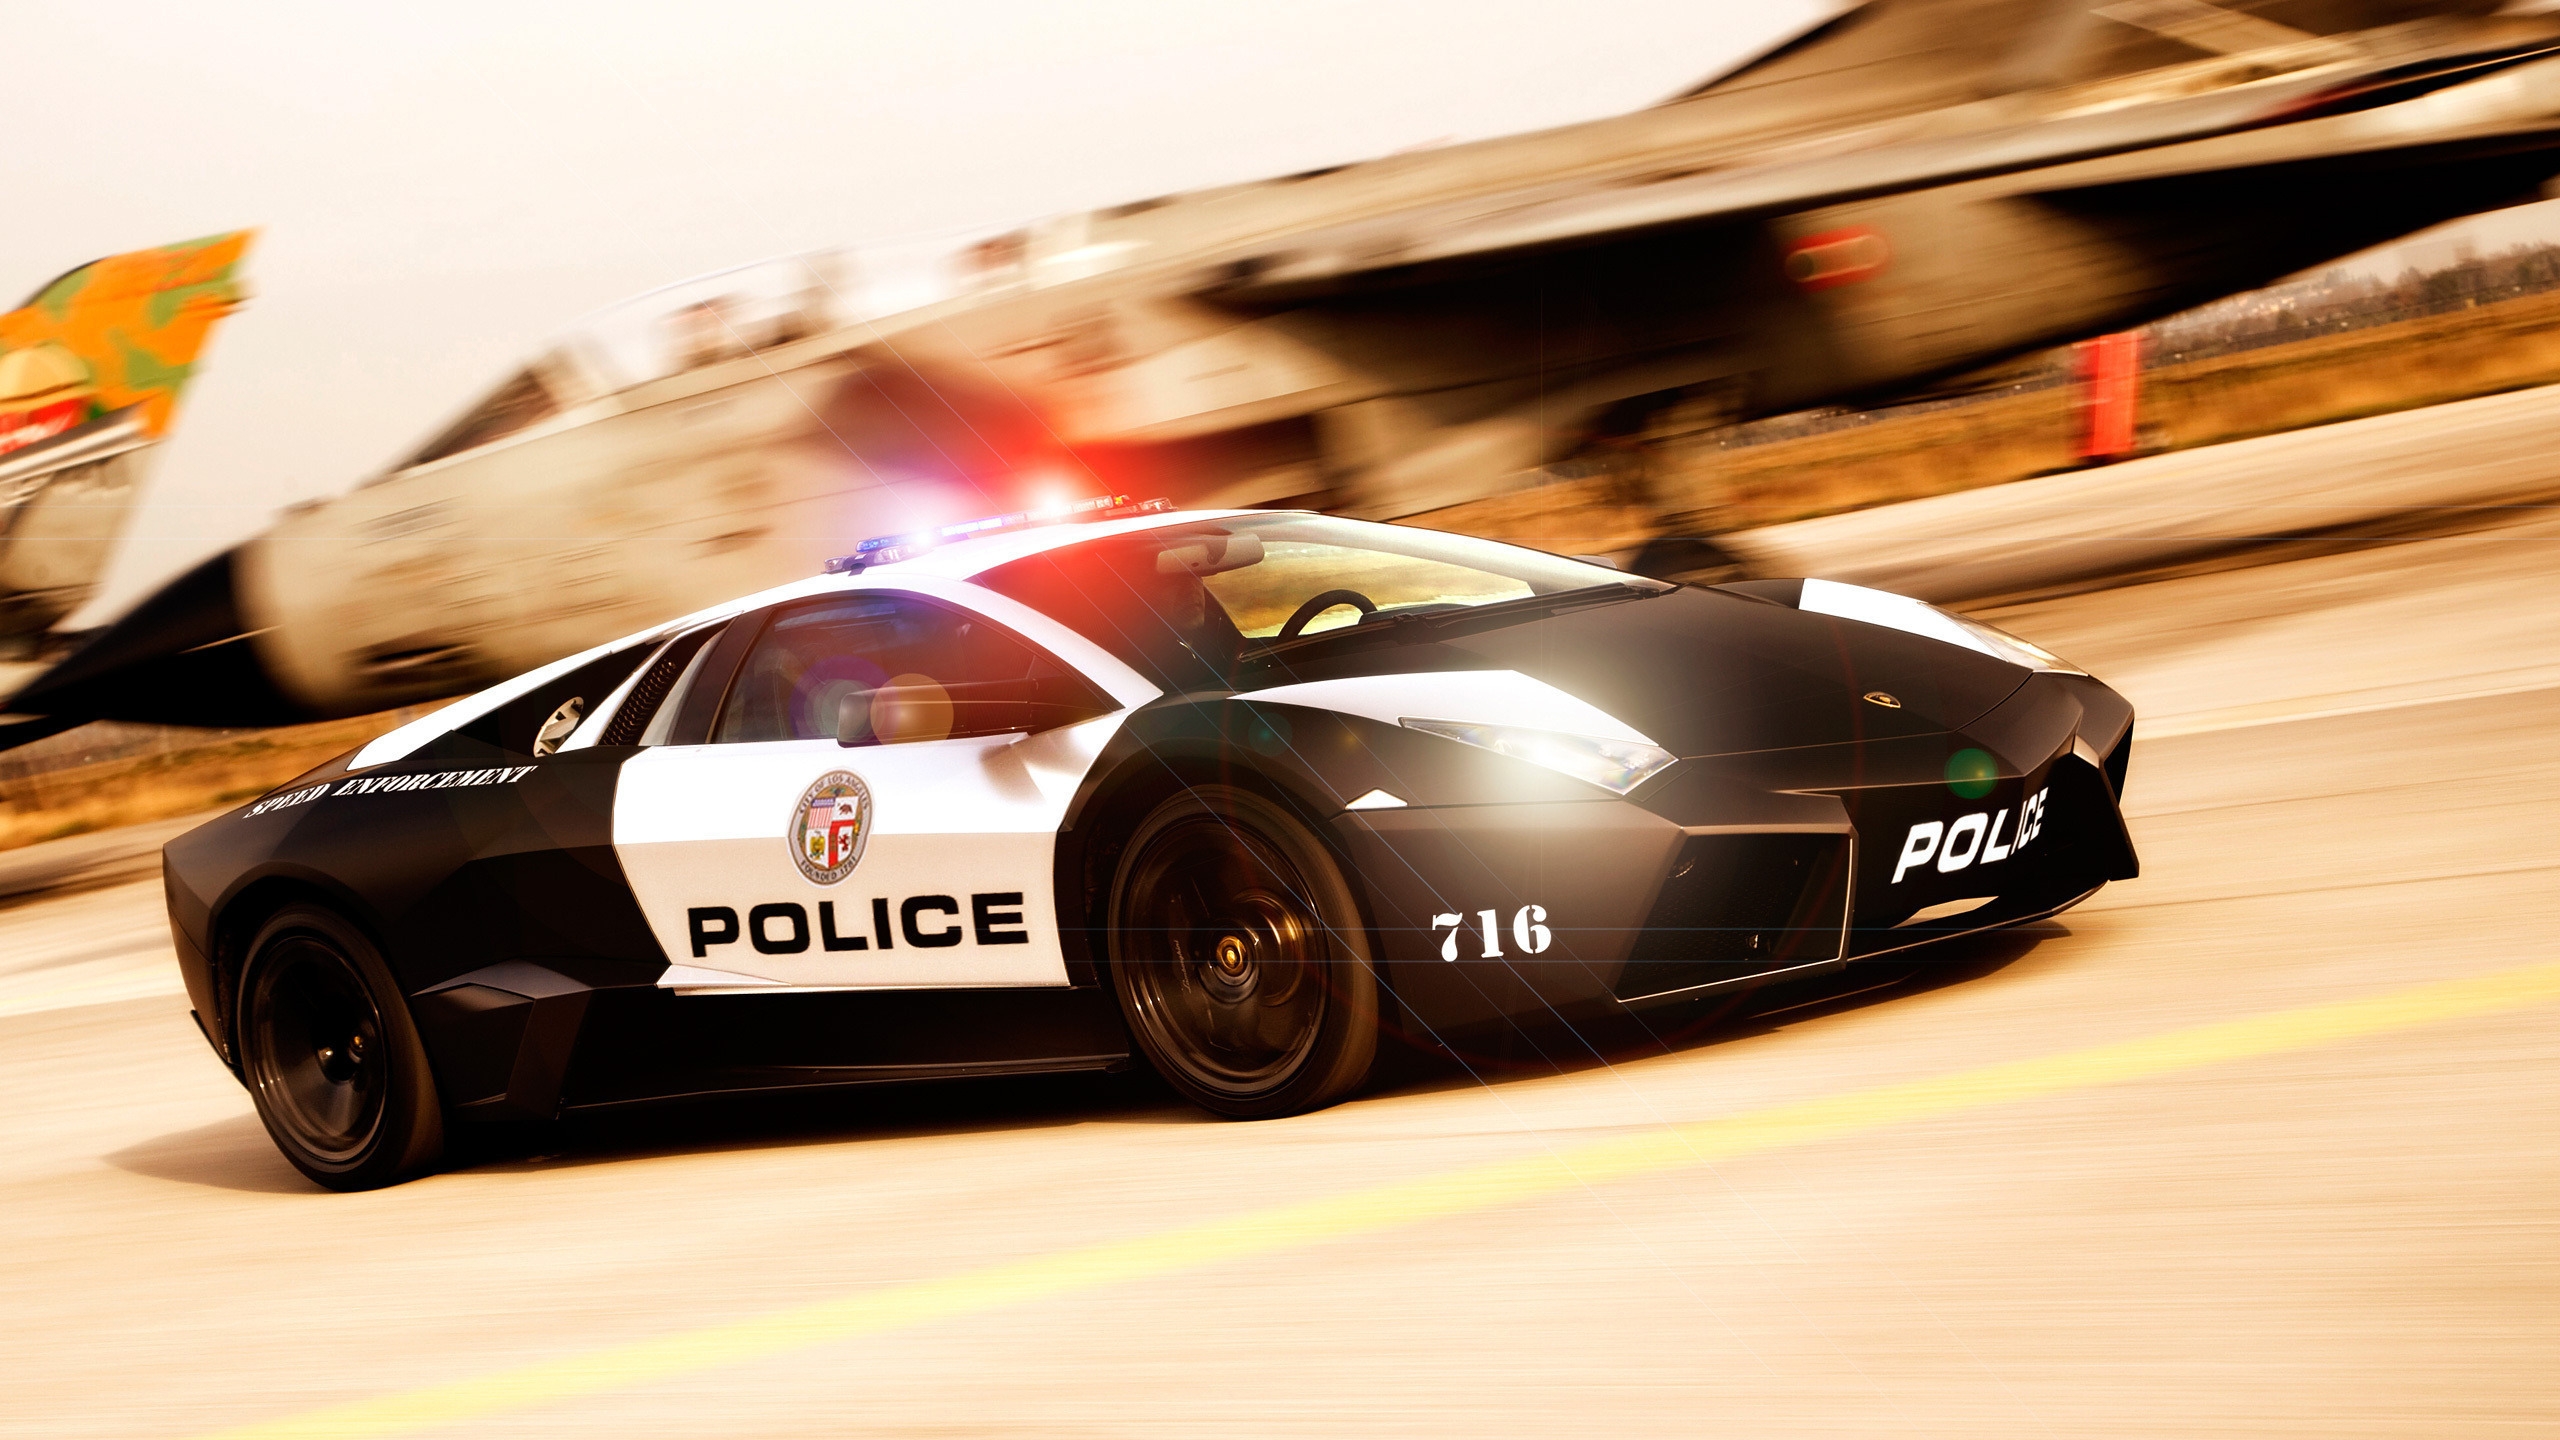 Lamborghini Police Car NFS for 2560x1440 HDTV resolution